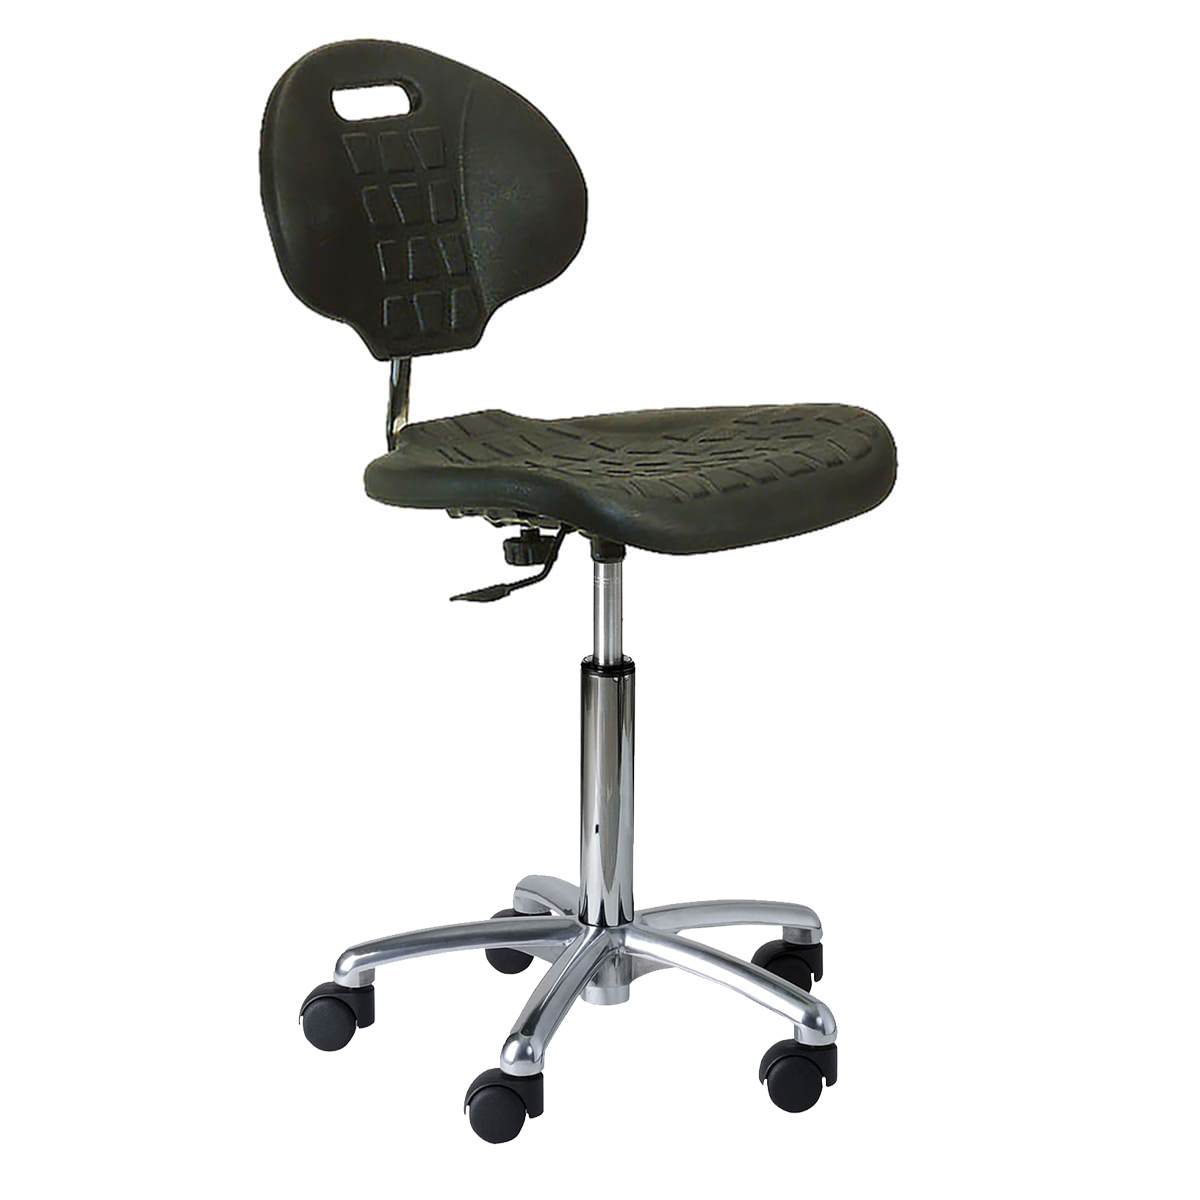 Chair with polyurethane rectangular seat, aluminium base